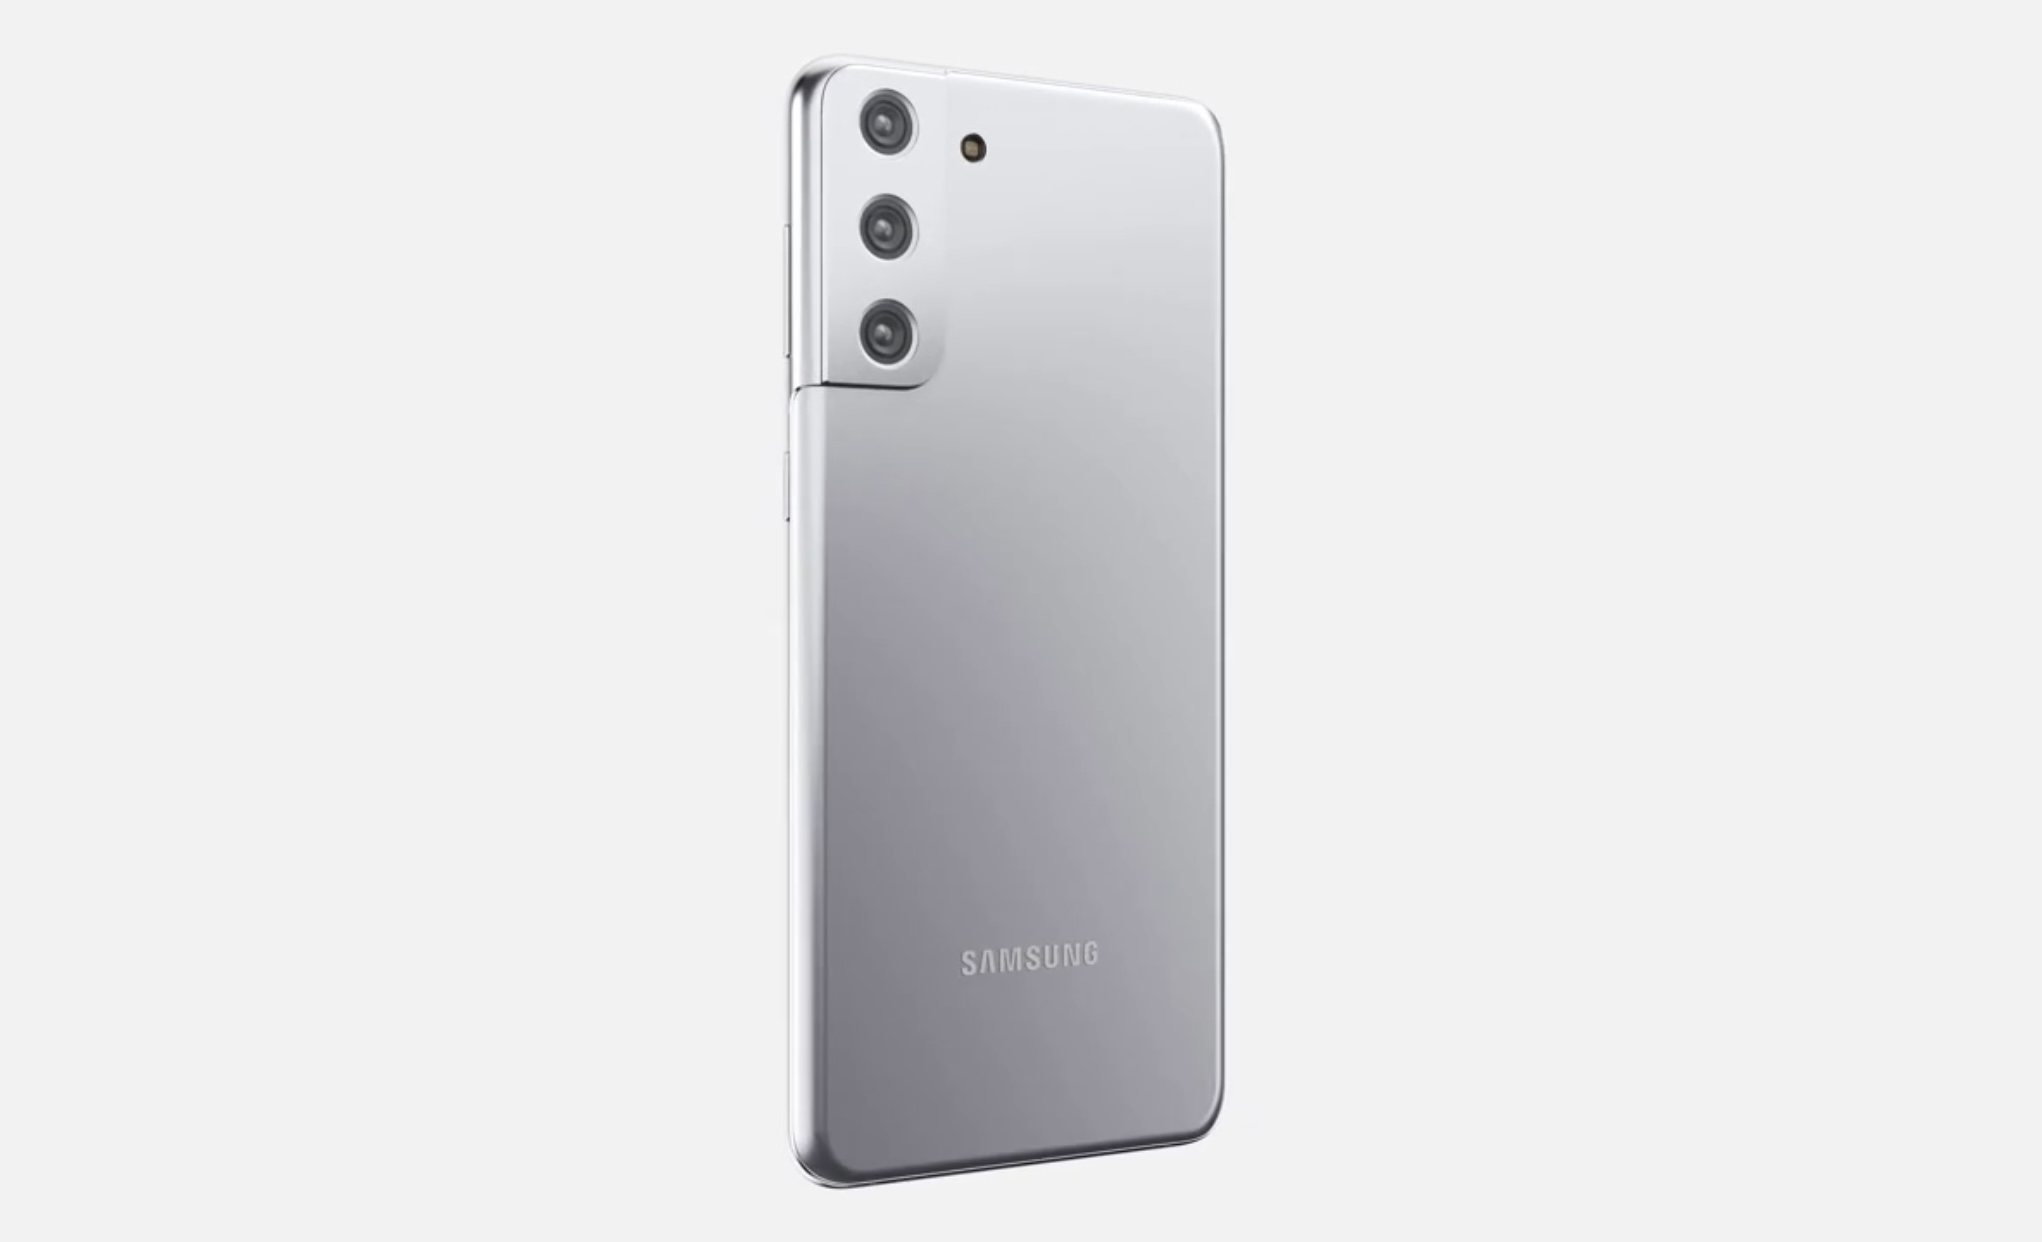 Samsung galaxy s21 snapdragon. Samsung s21 процессор Snapdragon. Samsung s21 5g Qualcomm Snapdragon 888. Samsung Galaxy s21 Snapdragon 888 купить.